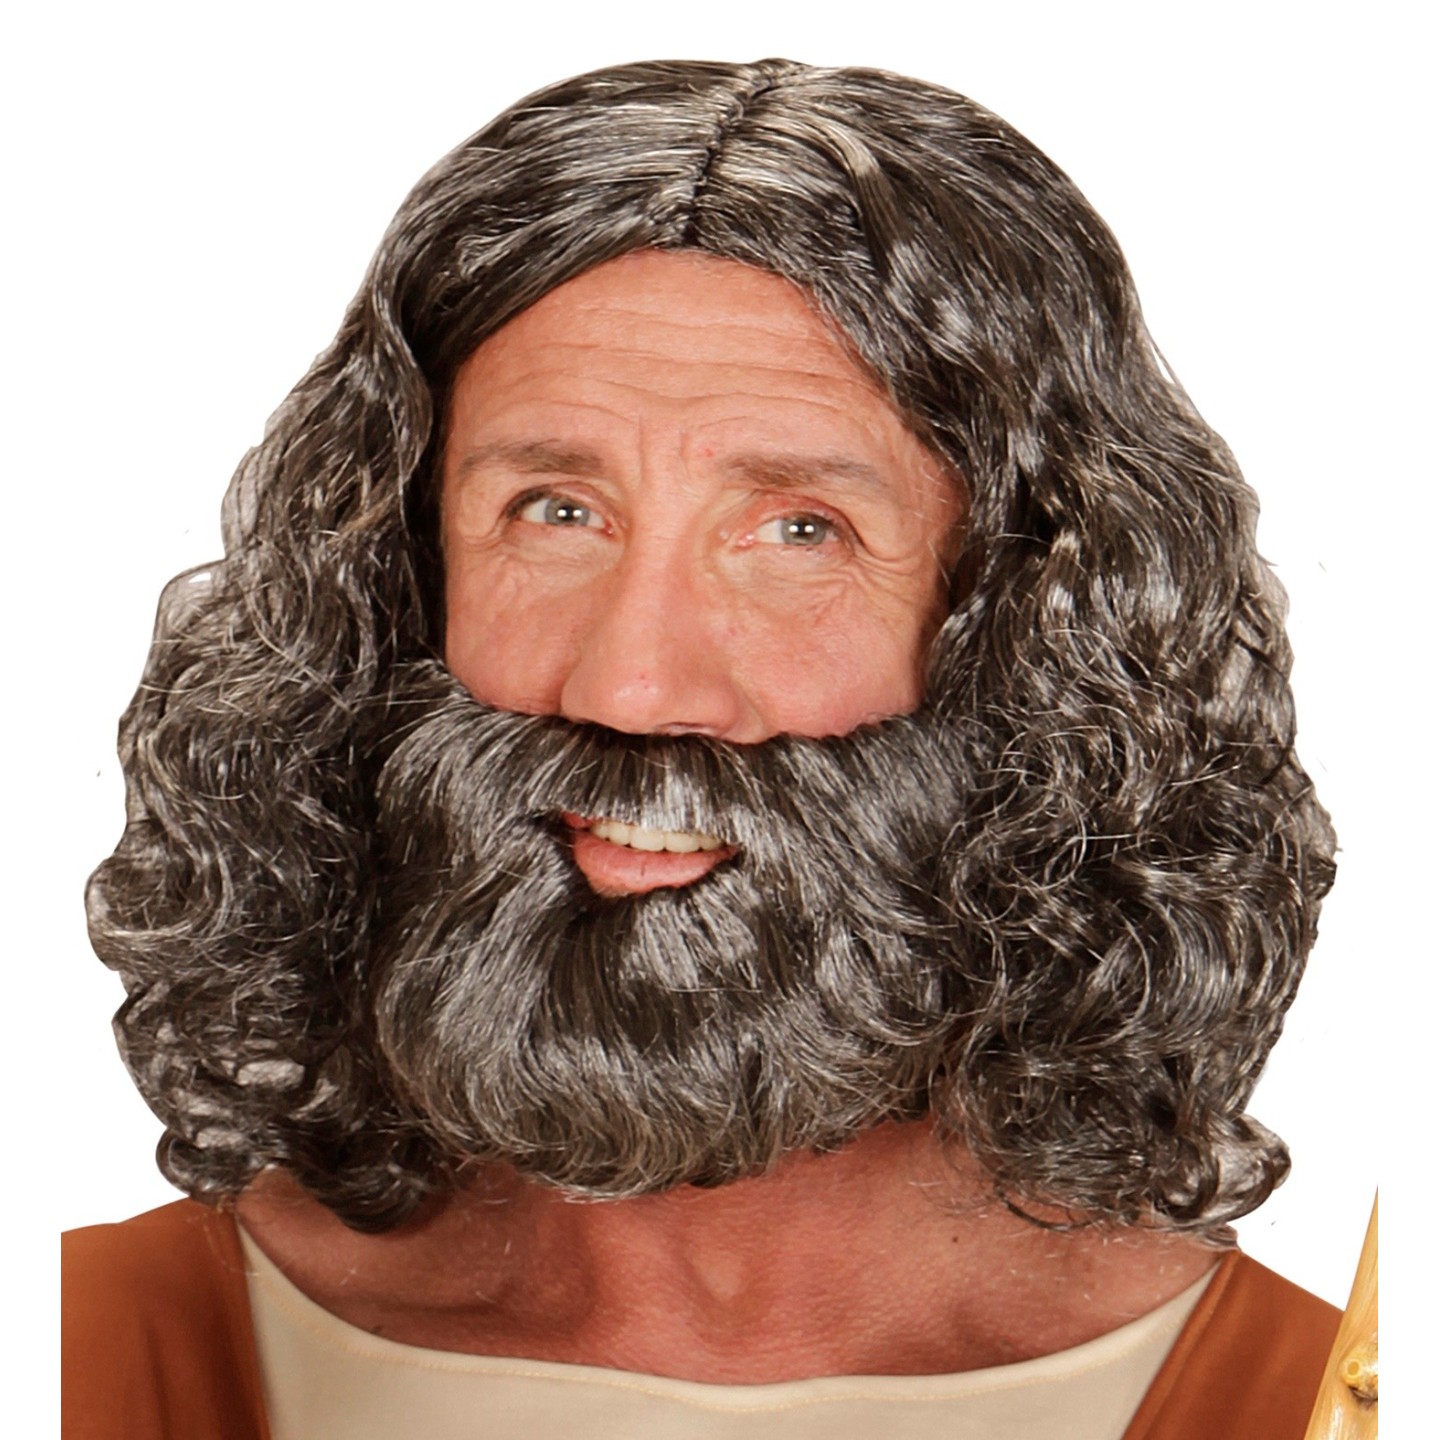 jezus pruik baard jozef profeet mozes 